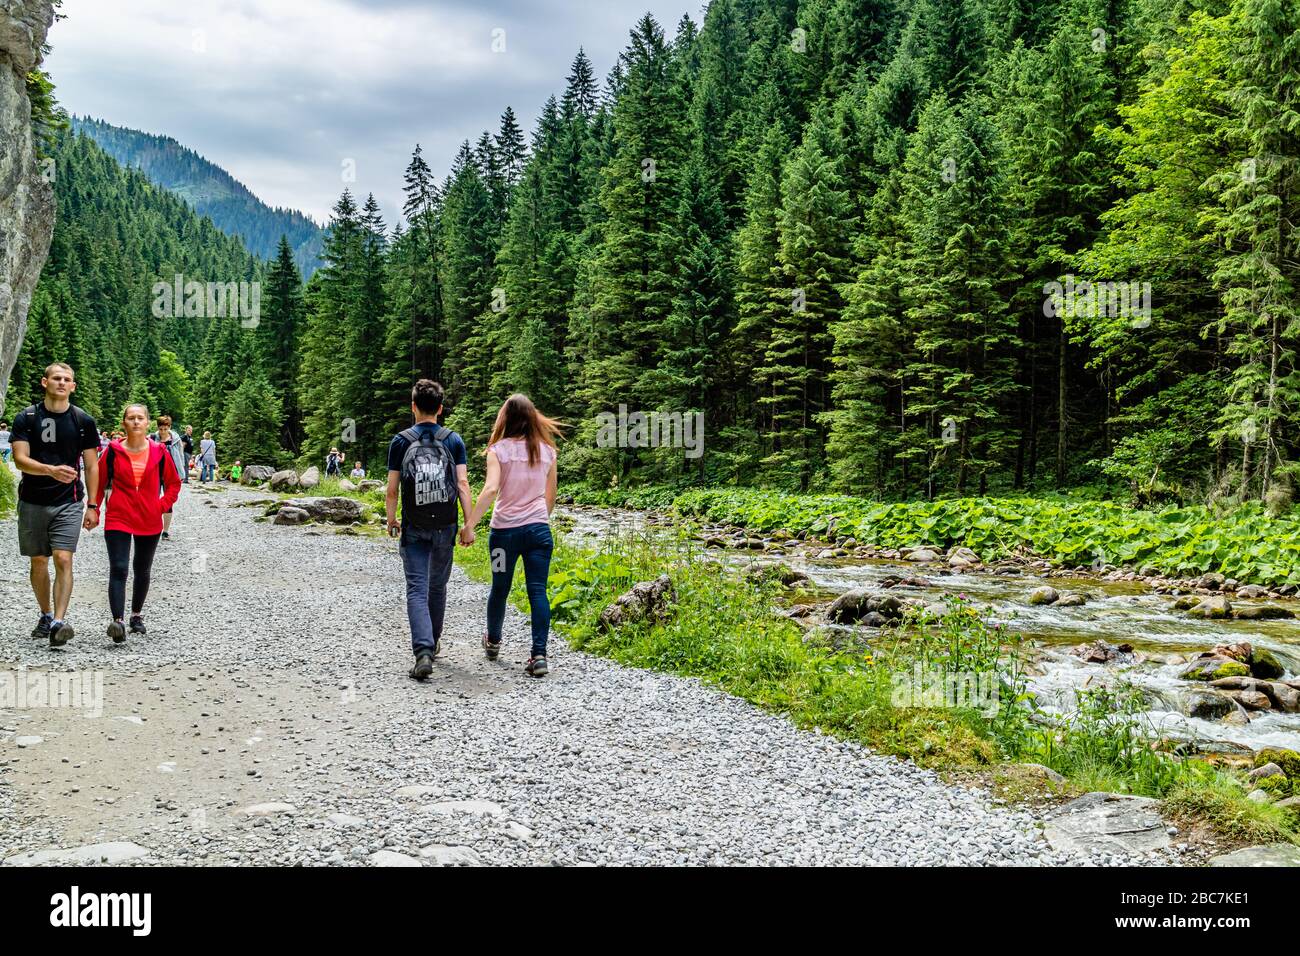 People walking in the Kościeliska valley in the Tatra Mountain National Park, near Zakopane, Poland. July 2017. Stock Photo